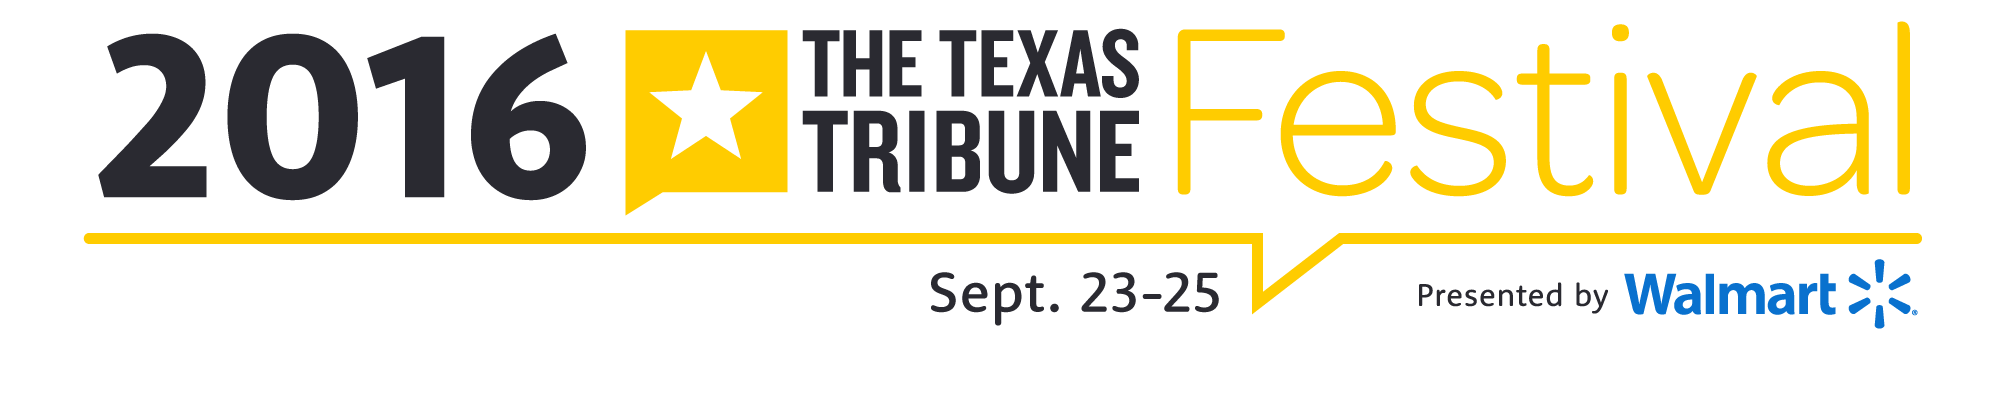 The Texas Tribune Festival logo